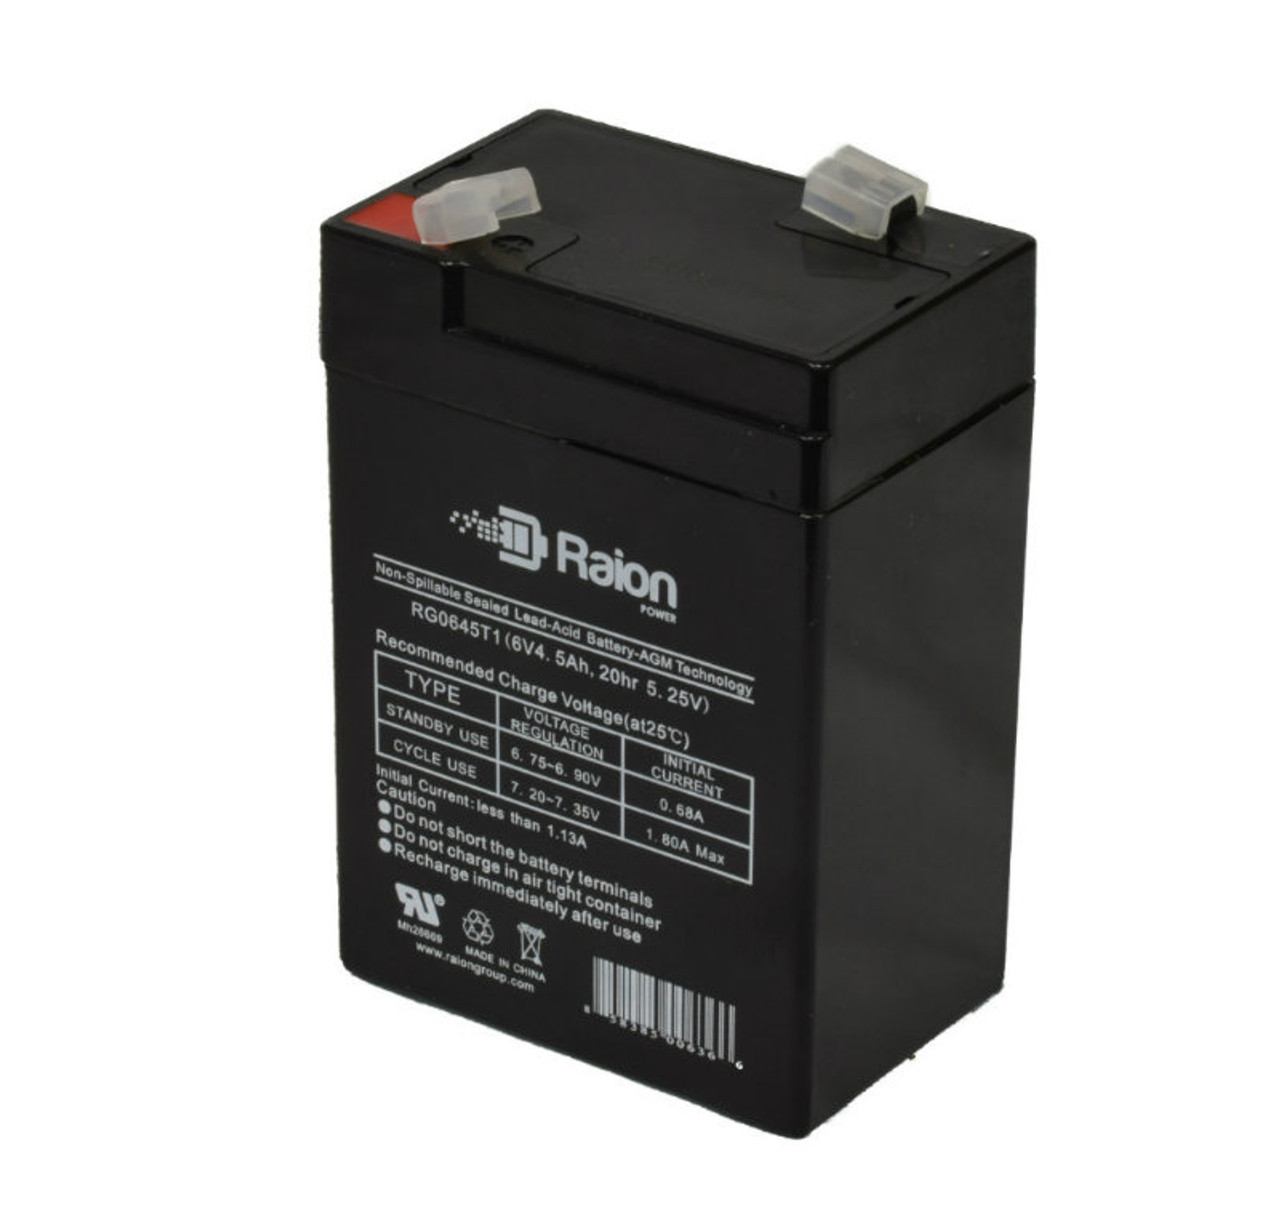 Raion Power RG0645T1 6V 4.5Ah Replacement Battery Cartridge for Emergi-Lite PSM9